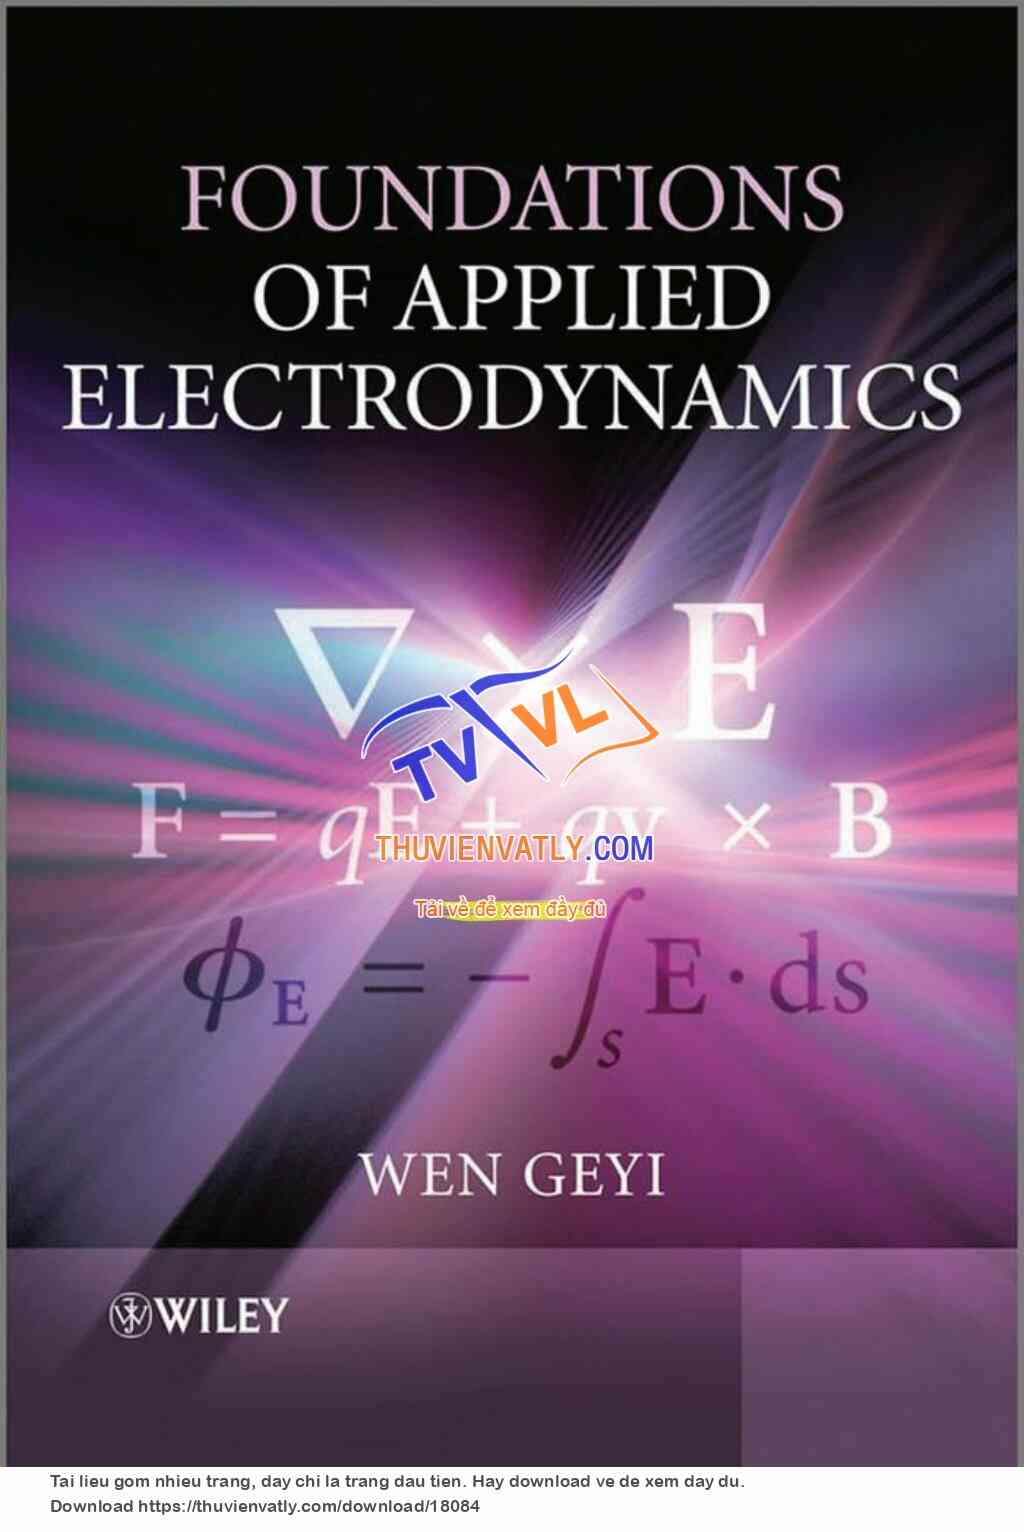 Foundations of Applied Electrodynamics (Wen Geyi, Wiley 2010)